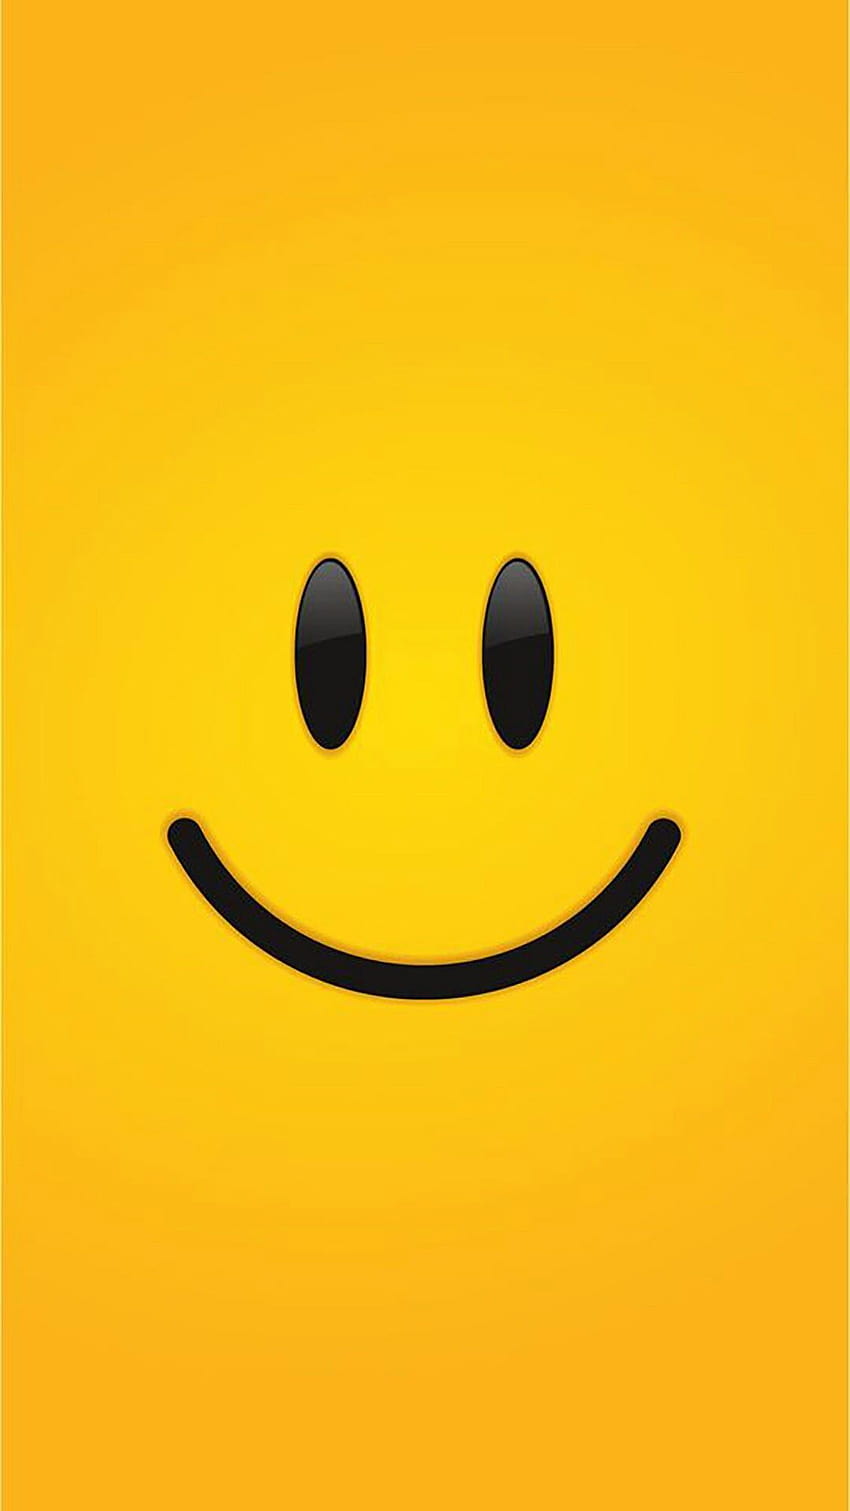 Smiley Face Iphone, cara sonriente amarilla fondo de pantalla del teléfono